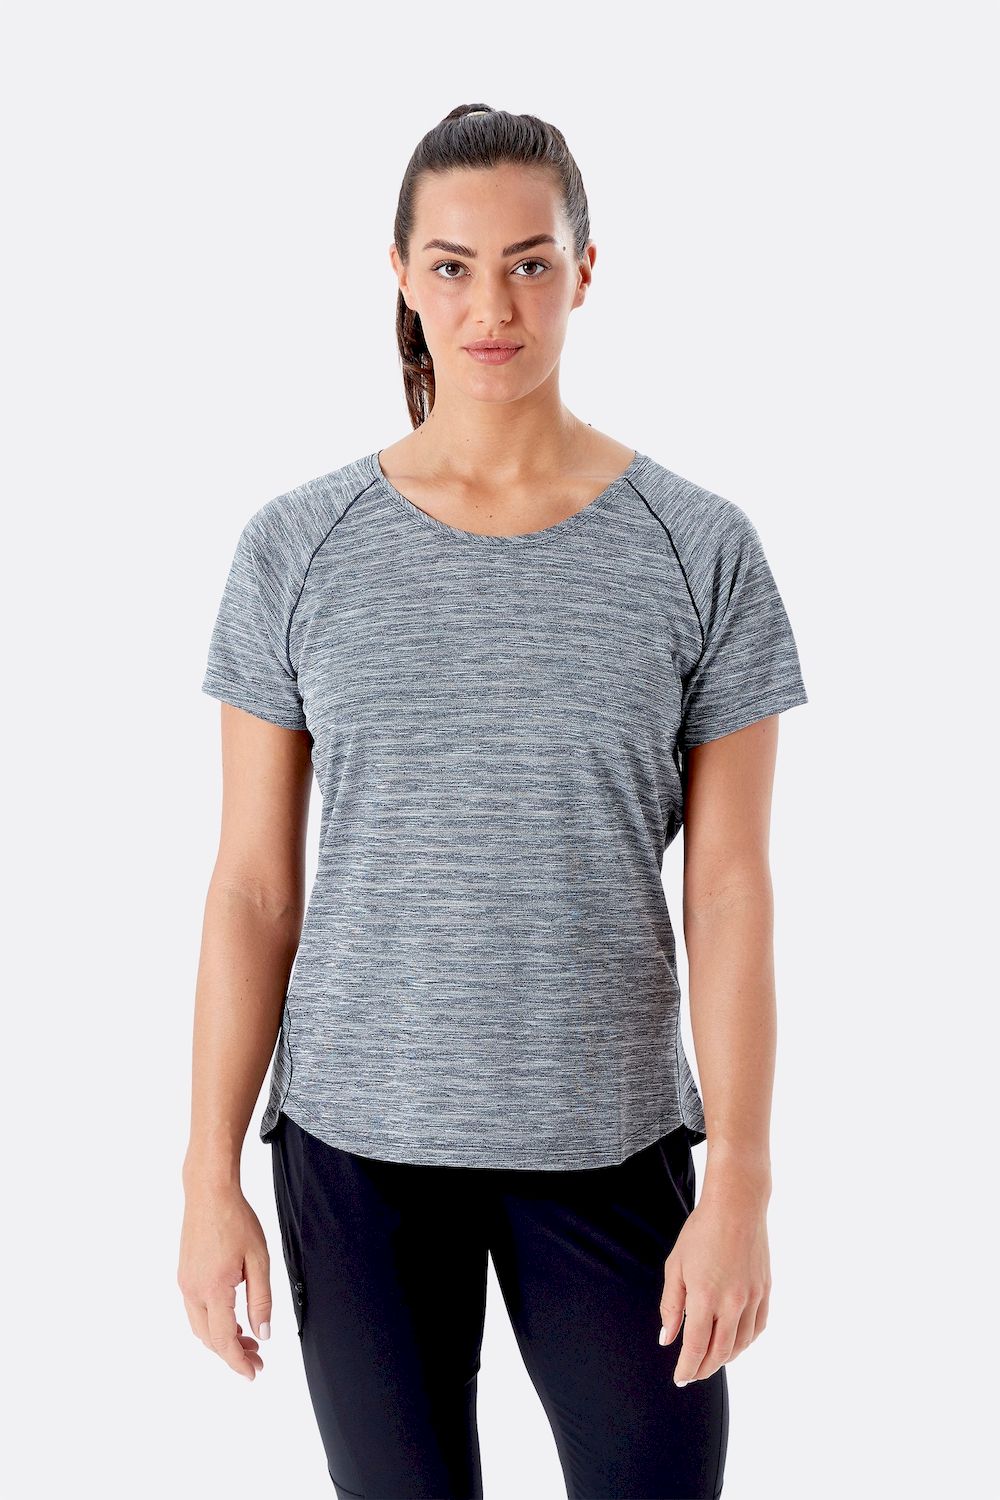 Rab Wisp Tee - T-shirt - Women's